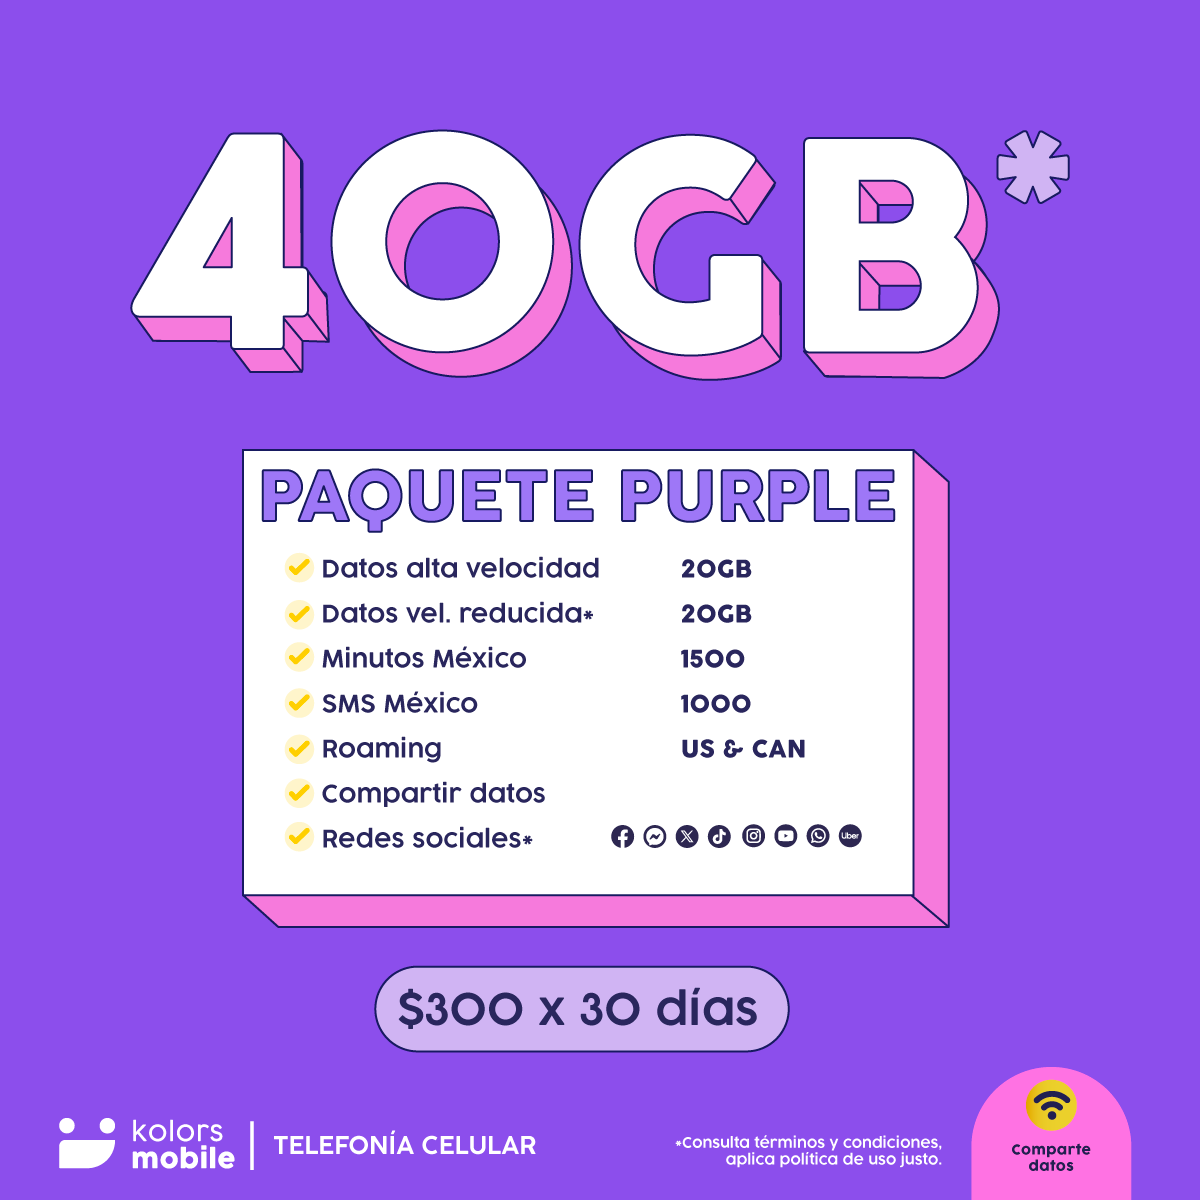 3. Paquete Purple + SIM